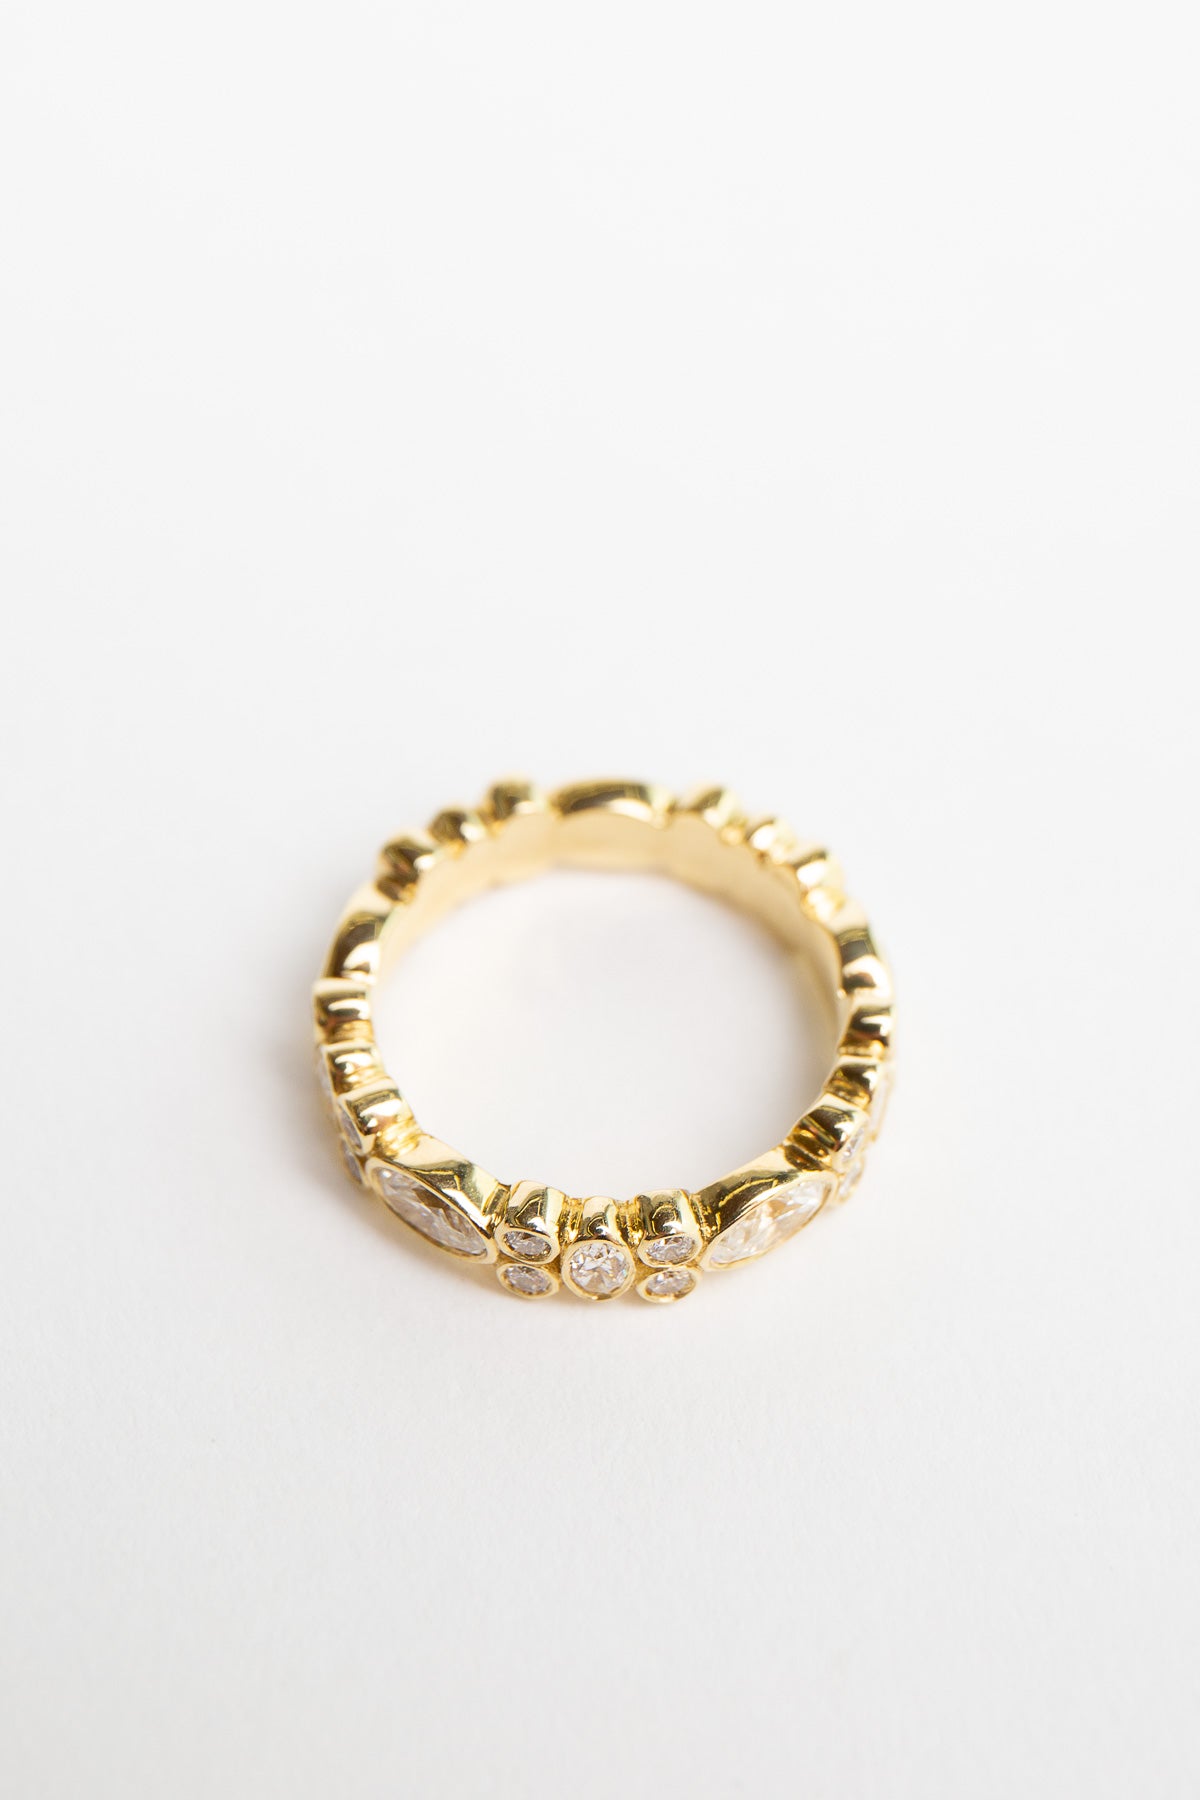 MAUD JEWELRY | 18K GOLD OVAL & ROUND DIAMOND STACK RING